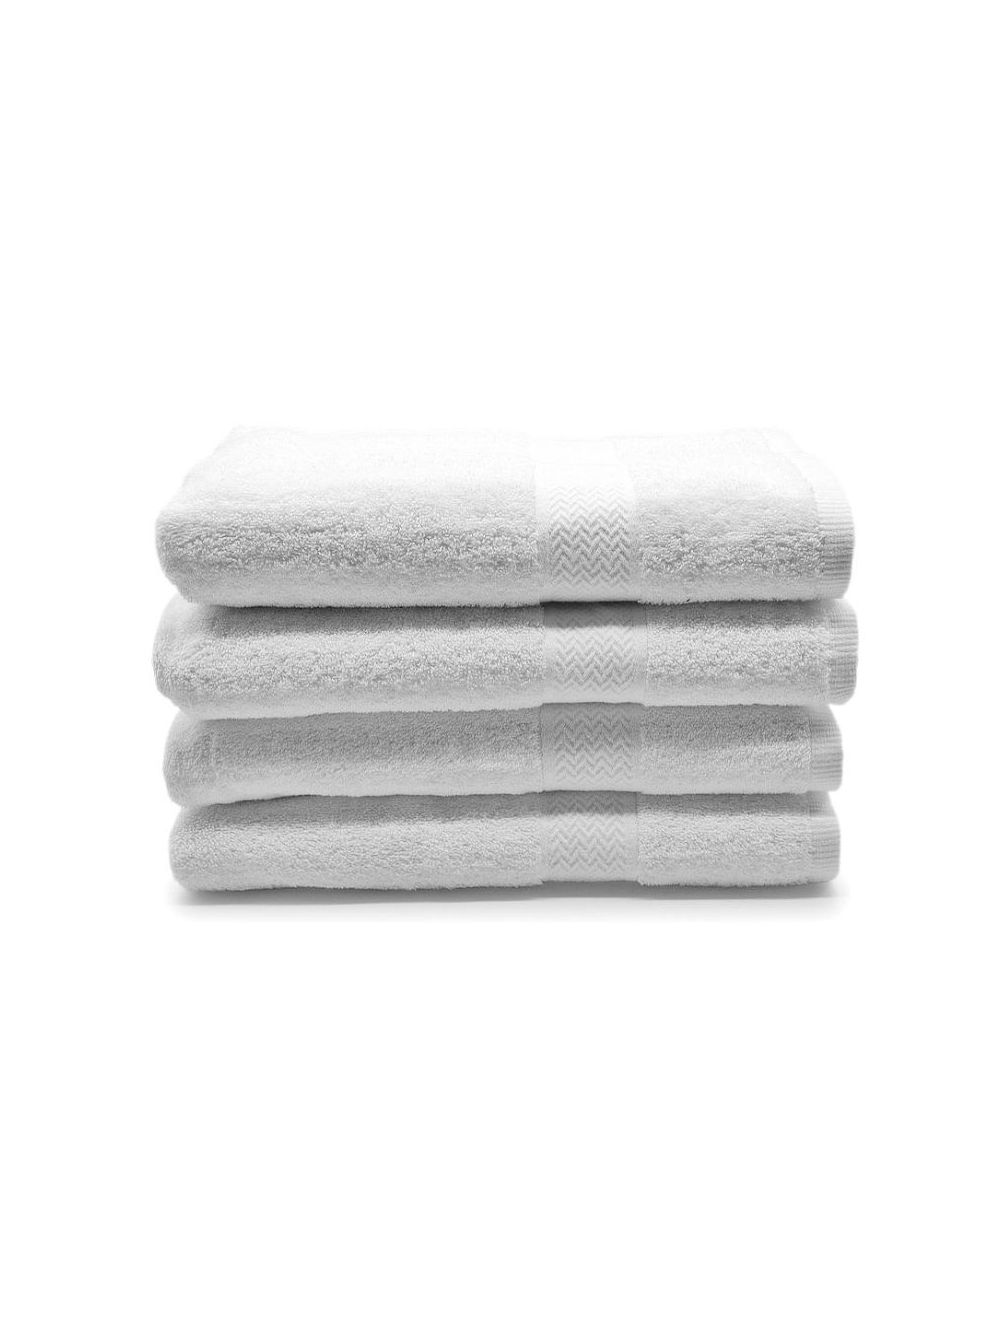 Rishahome 100% Cotton 4-Piece Bath Towel Set, Classic Collection, White  -14RHBTW064